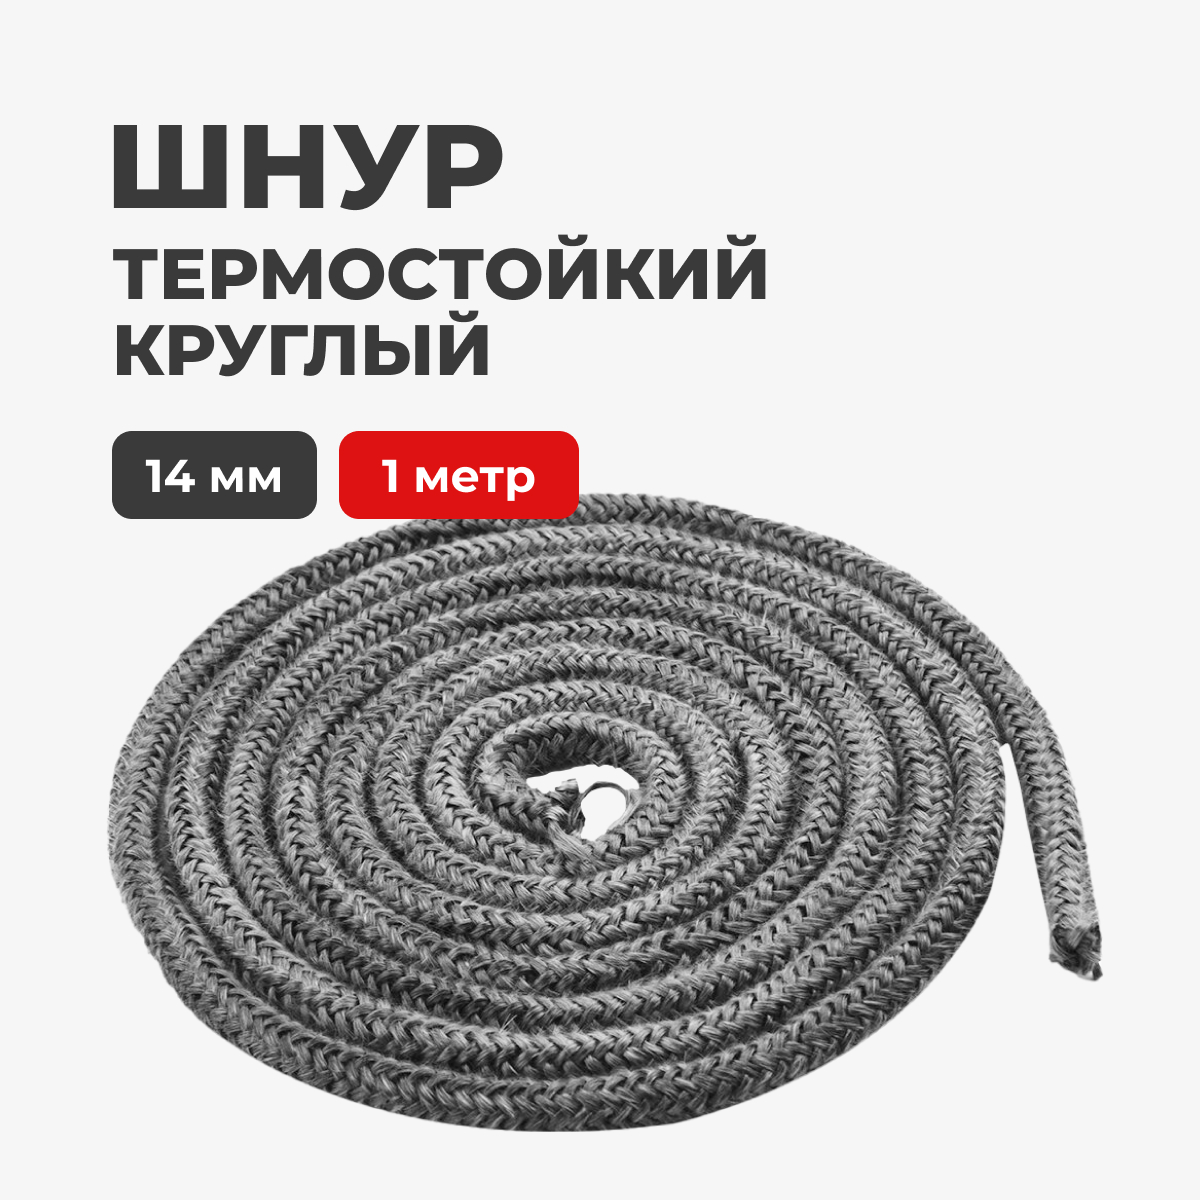 Шнур термостойкий для печей и каминов R-SAUNA круглый 14 мм. 1 метр, 27082 патрон декоративный шнур 1 метр e27 бронза